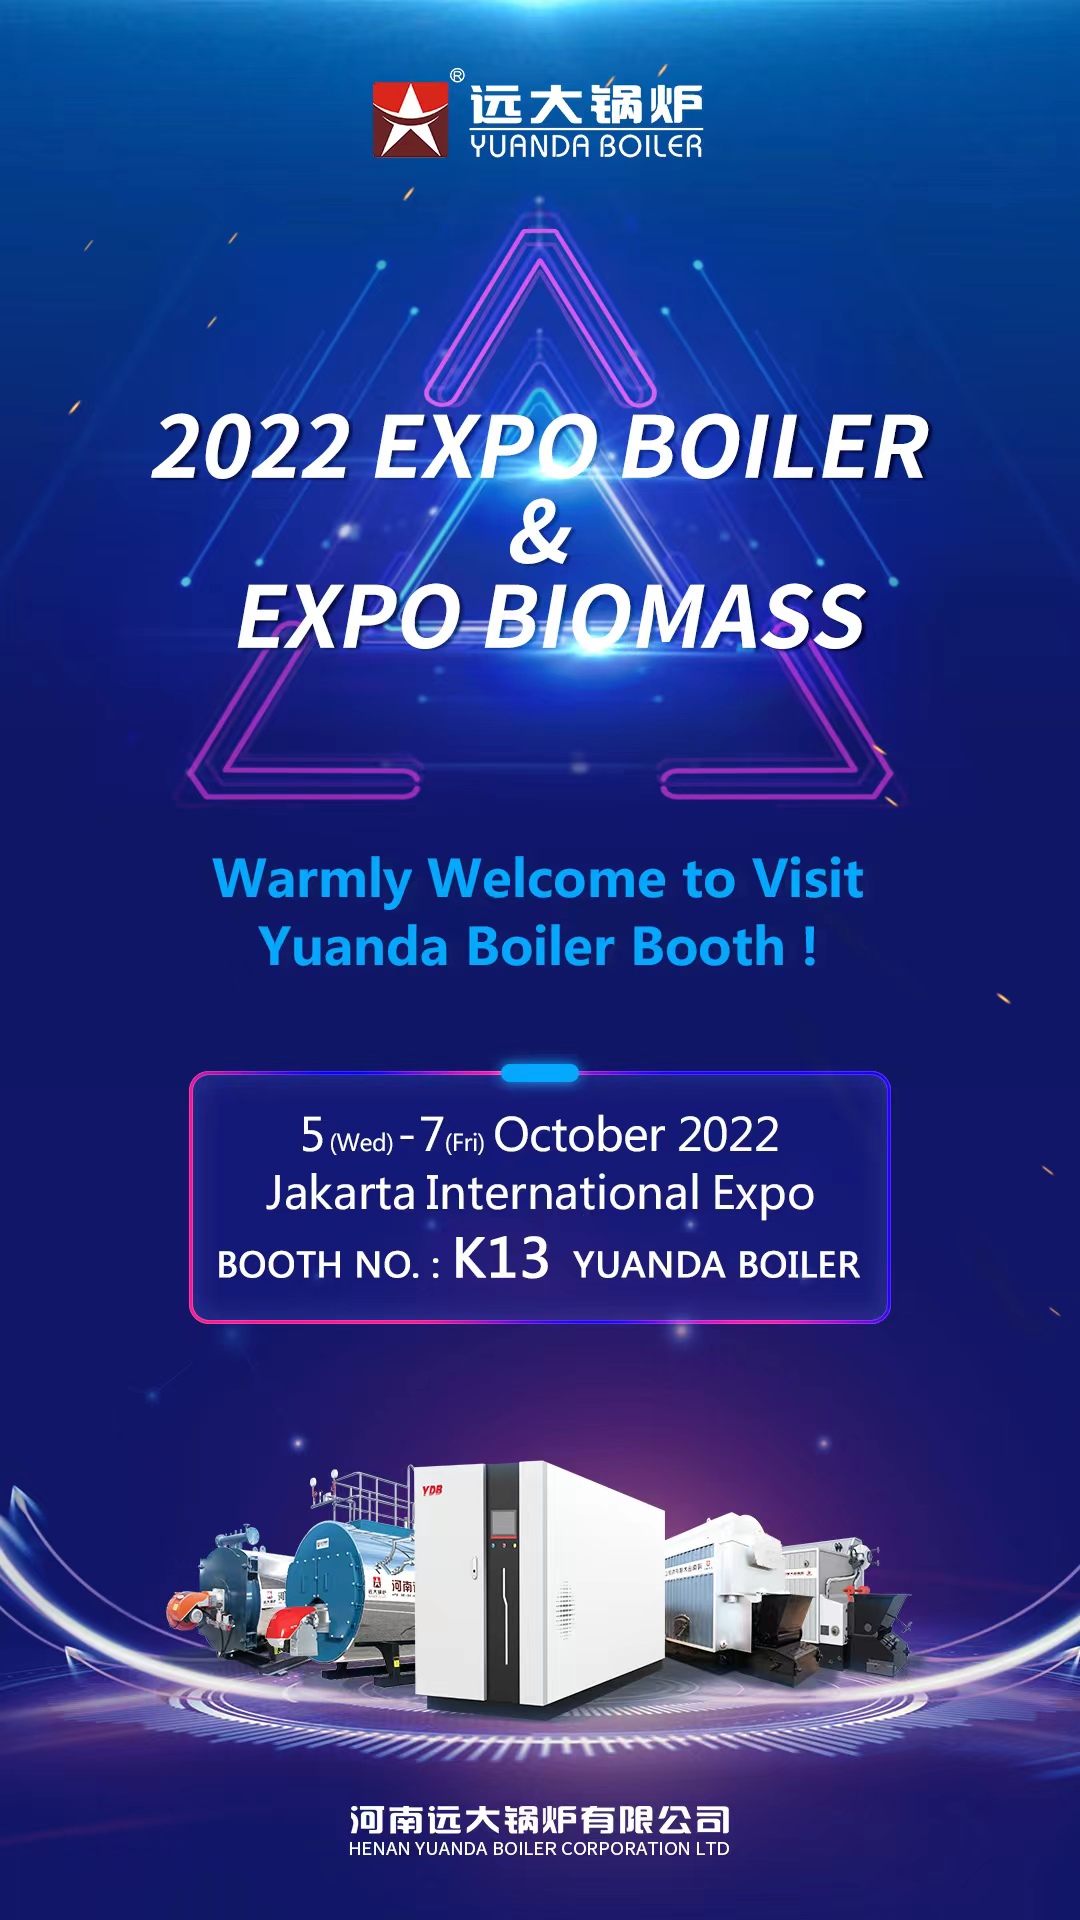 henan yuanda boiler indonesia exhibition.jpg